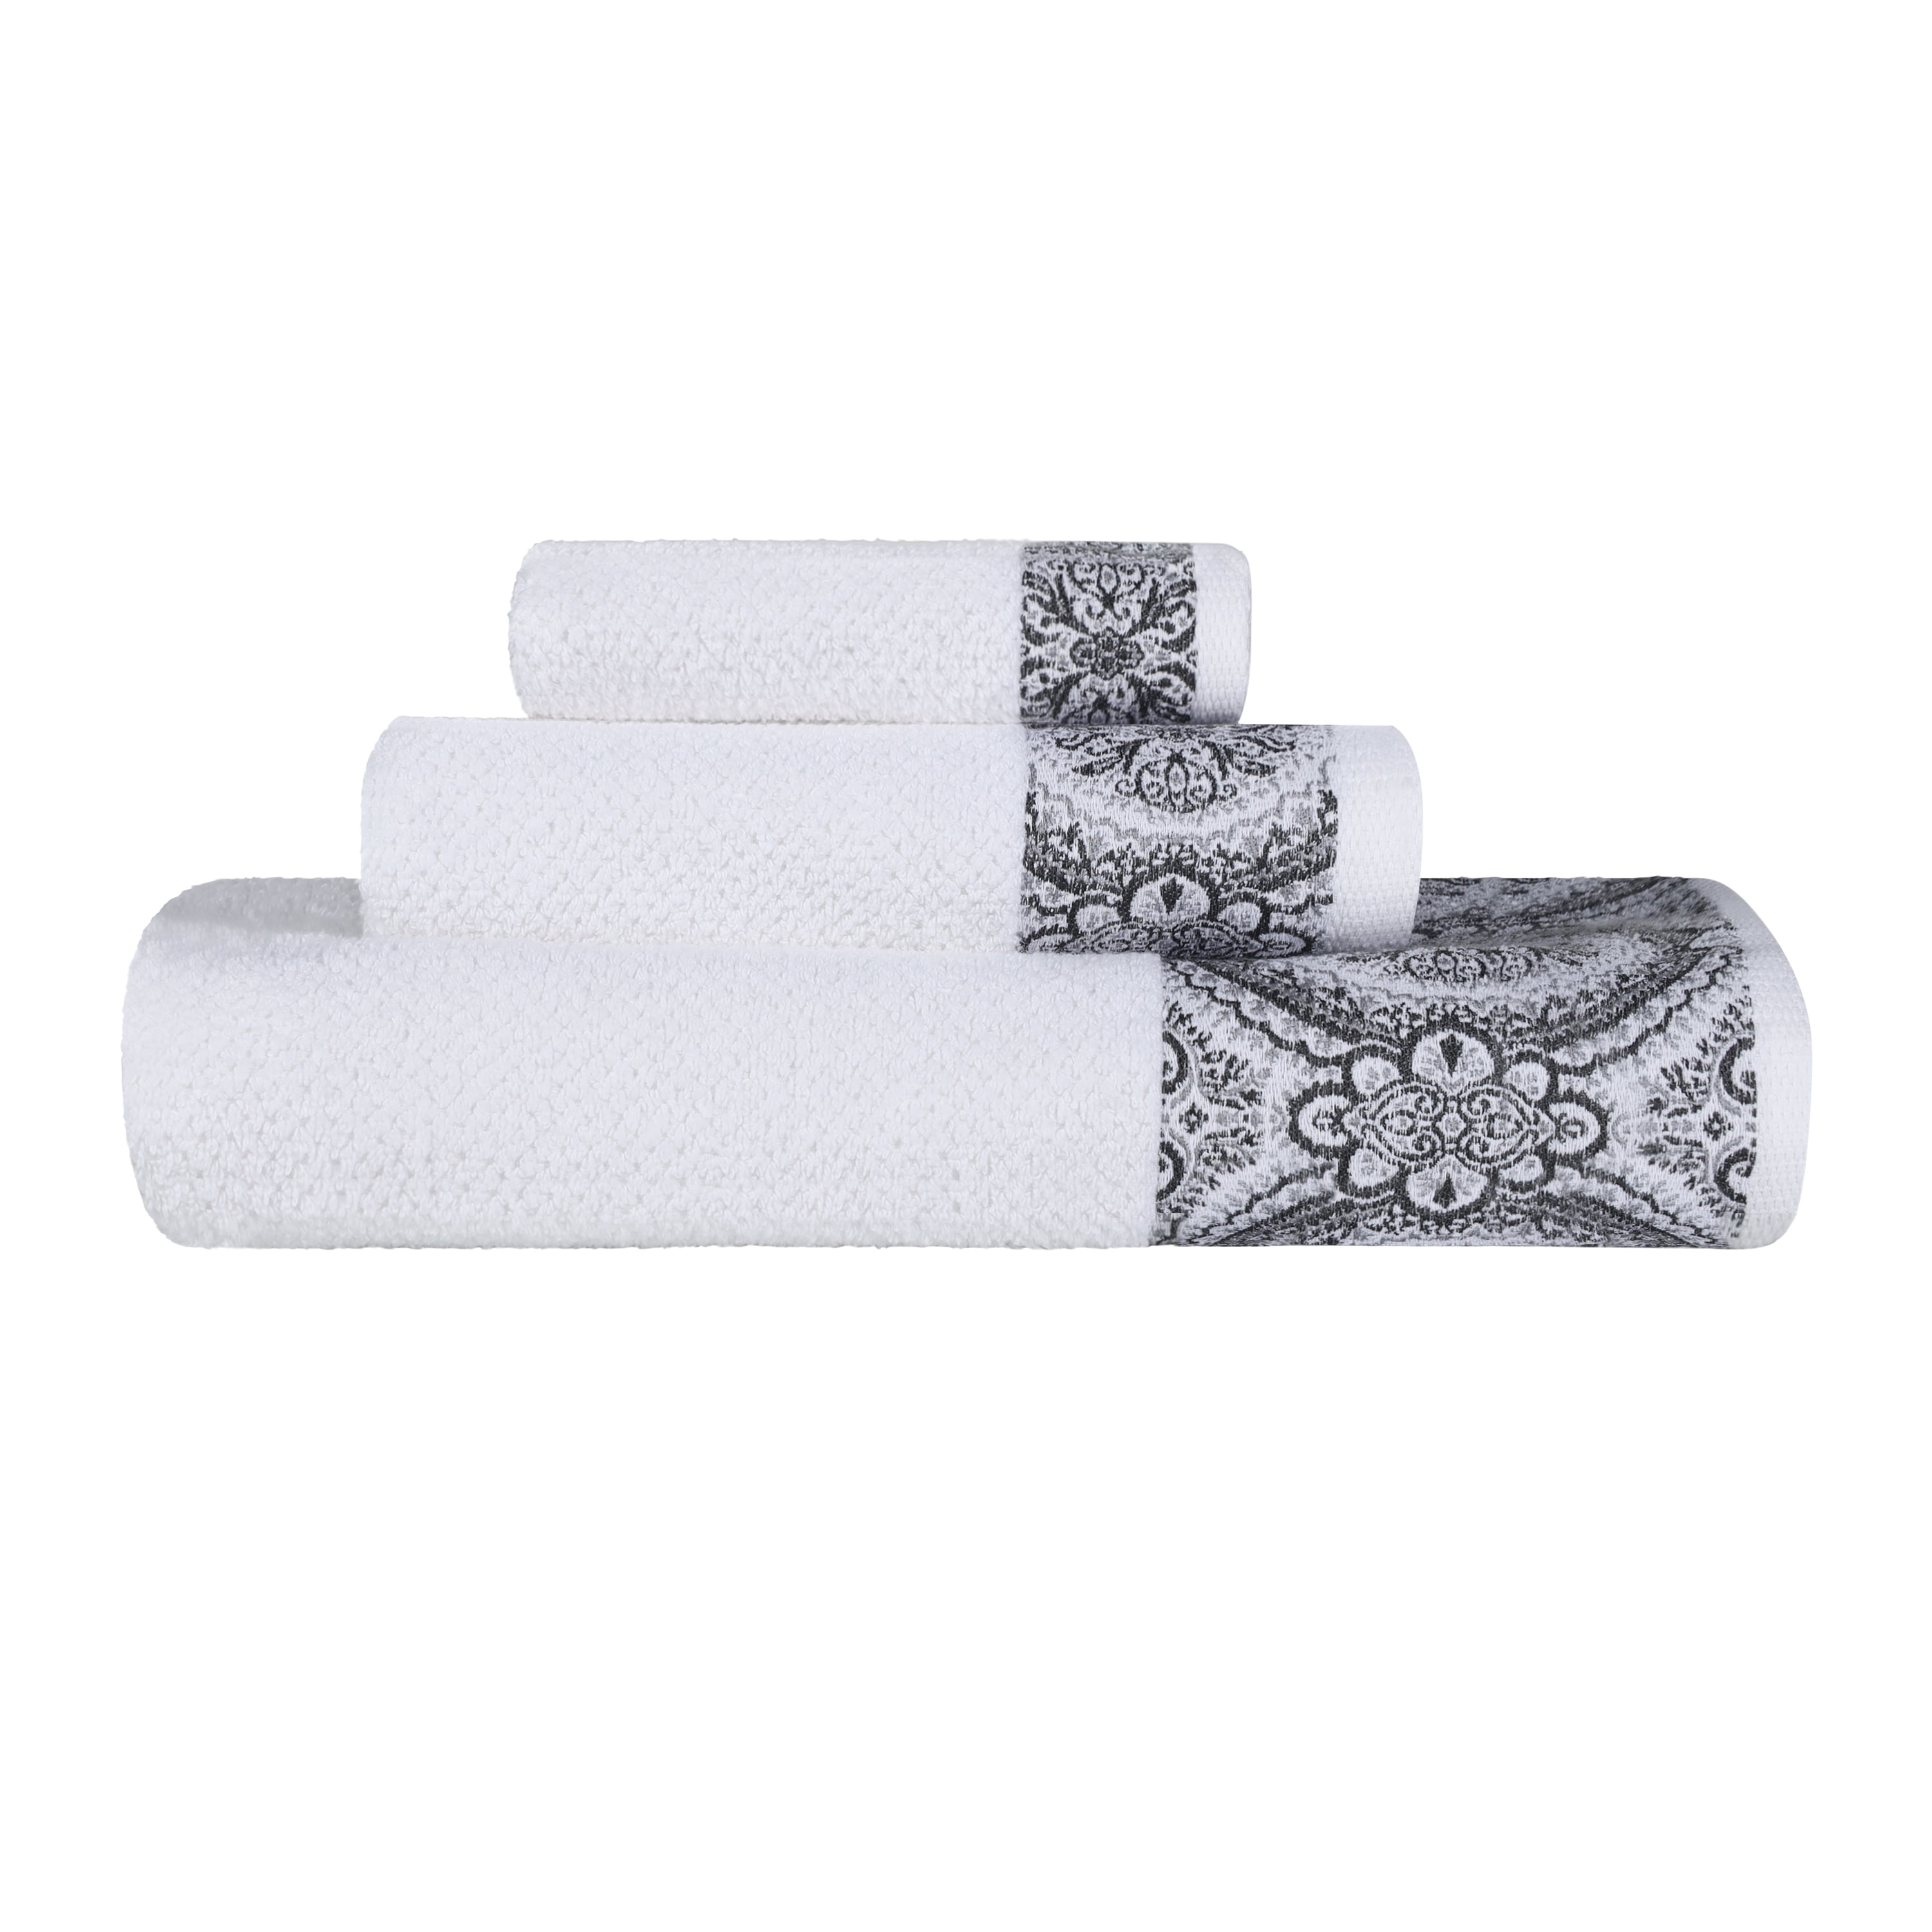 ClearloveWL Bath towel, Stripe Towel Set Face Towel Large Thick